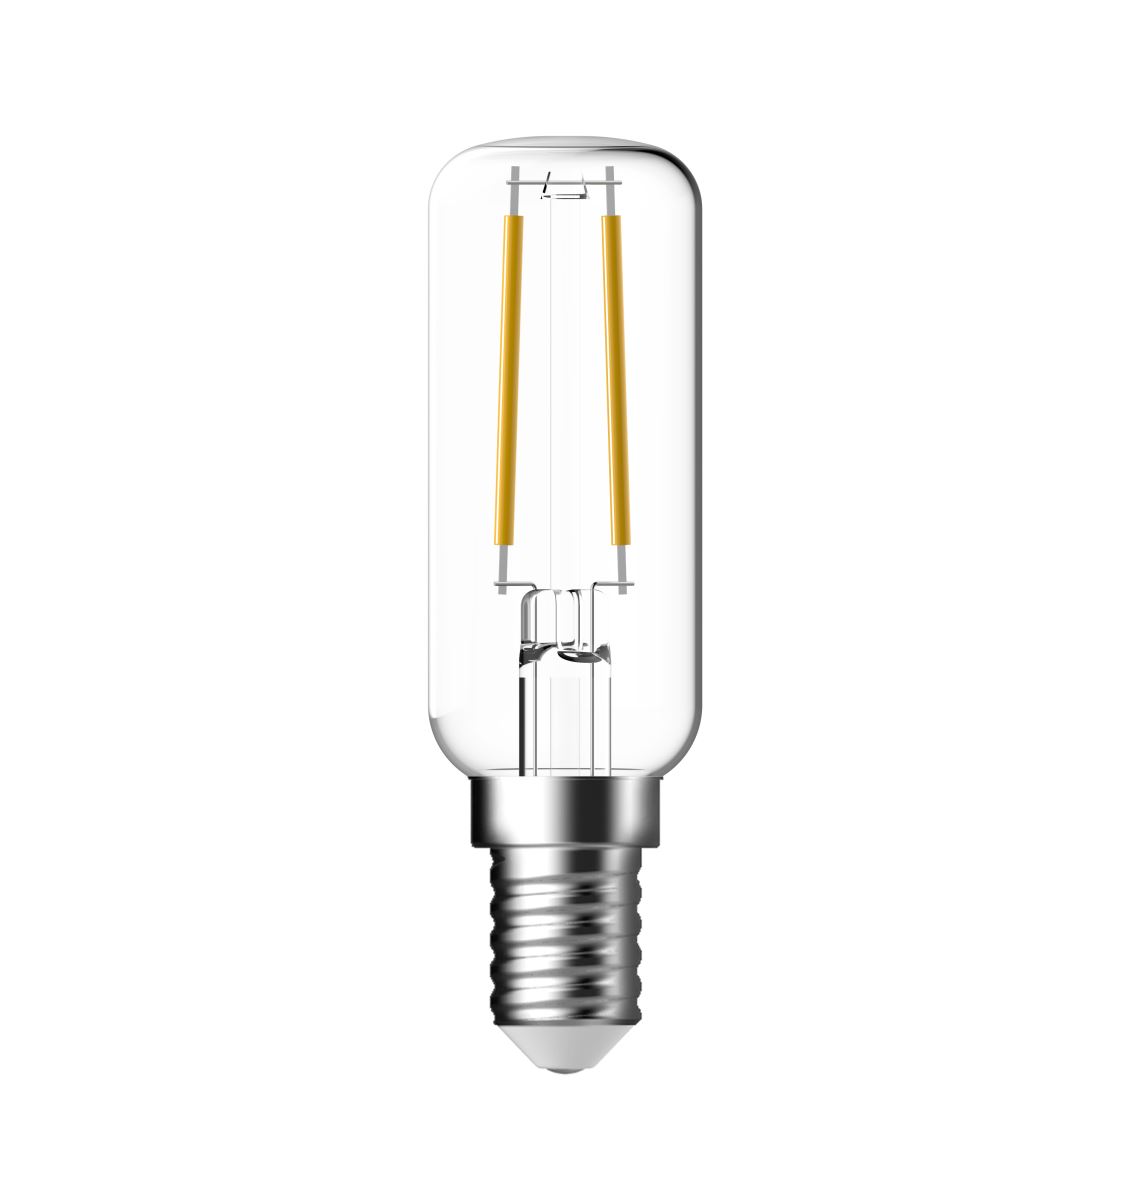 Nordlux Energetic LED Leuchtmittel E14 T25 Filament klar 470lm 2700K 4W 80Ra 360° 2,5x2,5x8,5cm von Energetic